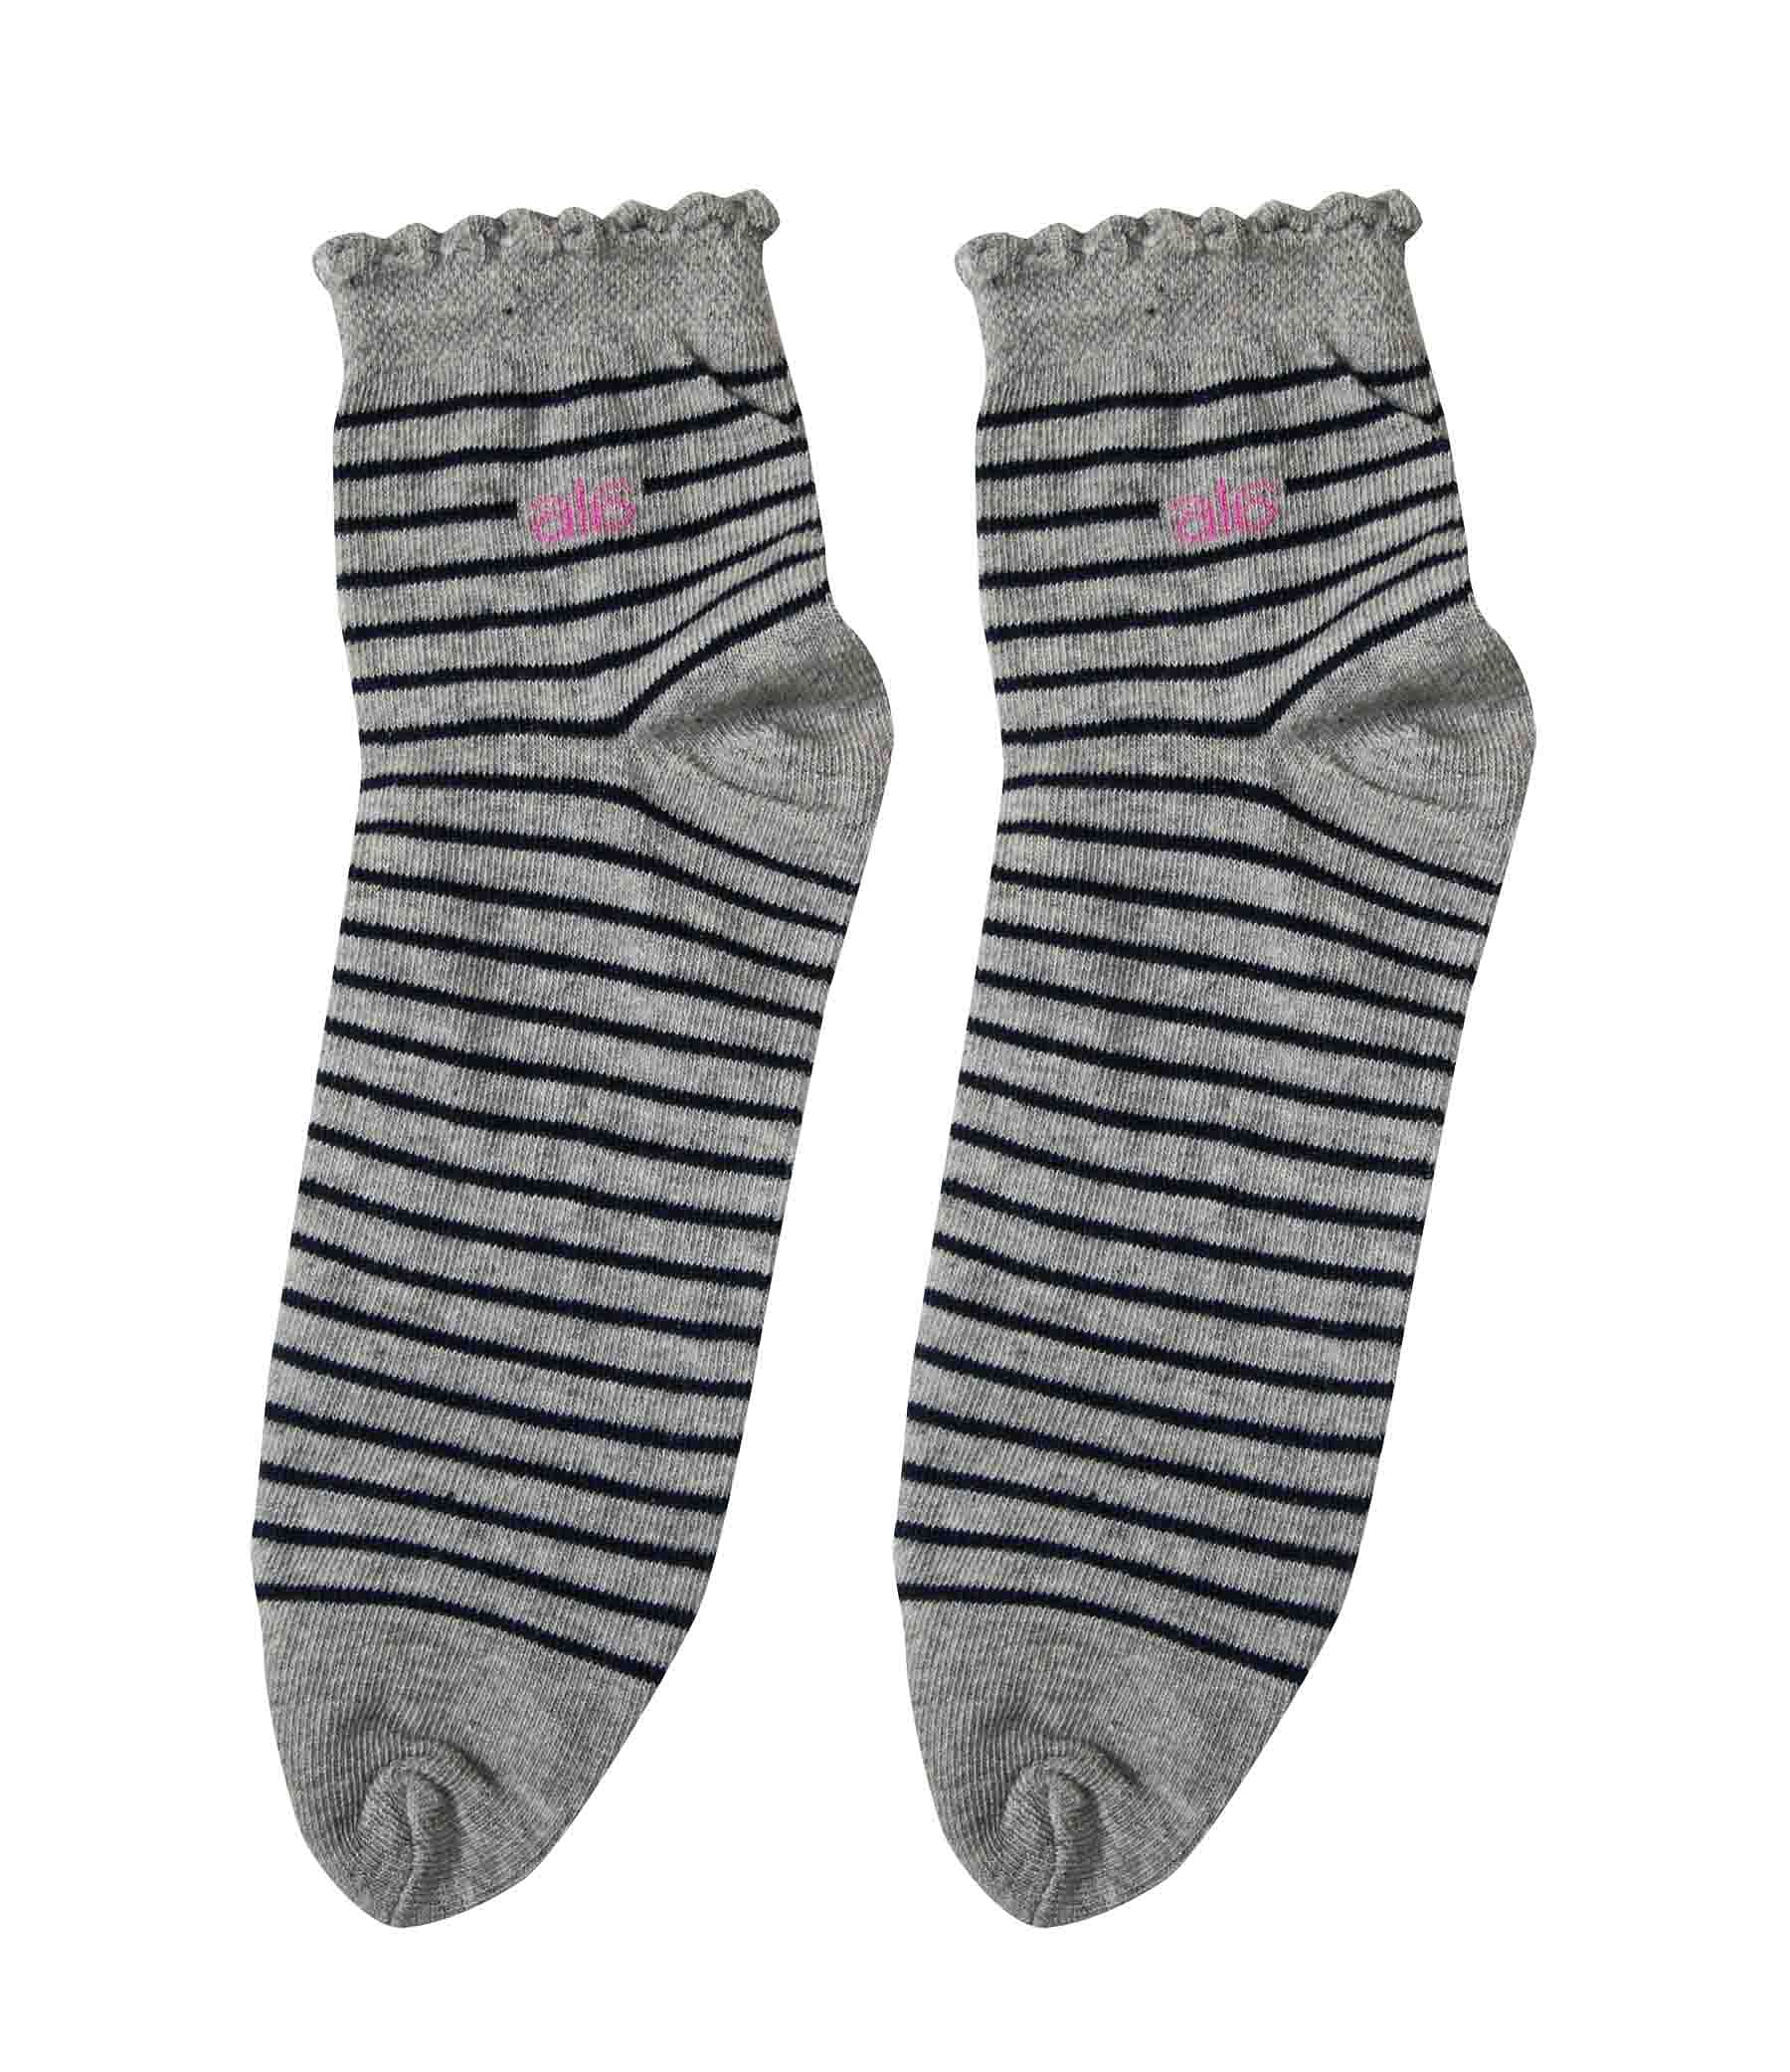 Ellie Wmn ankle Socks - Design-BG-Wmn-DESIGN-003-LGR